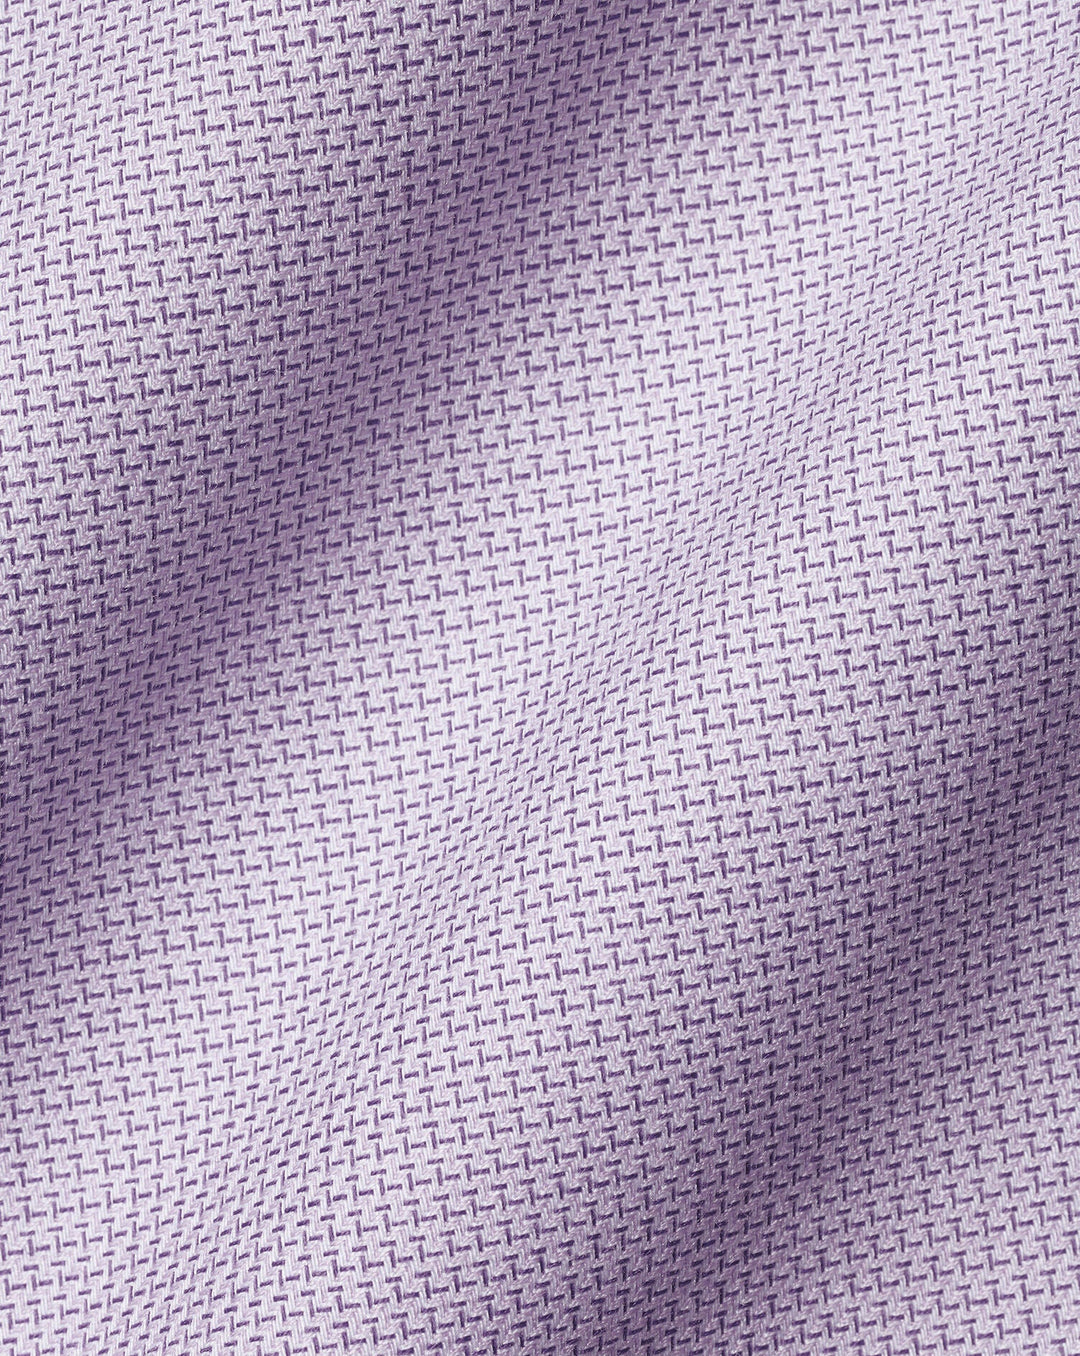 Charles Tyrwhitt Mauve Purple Non-Iron Richmond Weave Cutaway Slim Fit Shirt